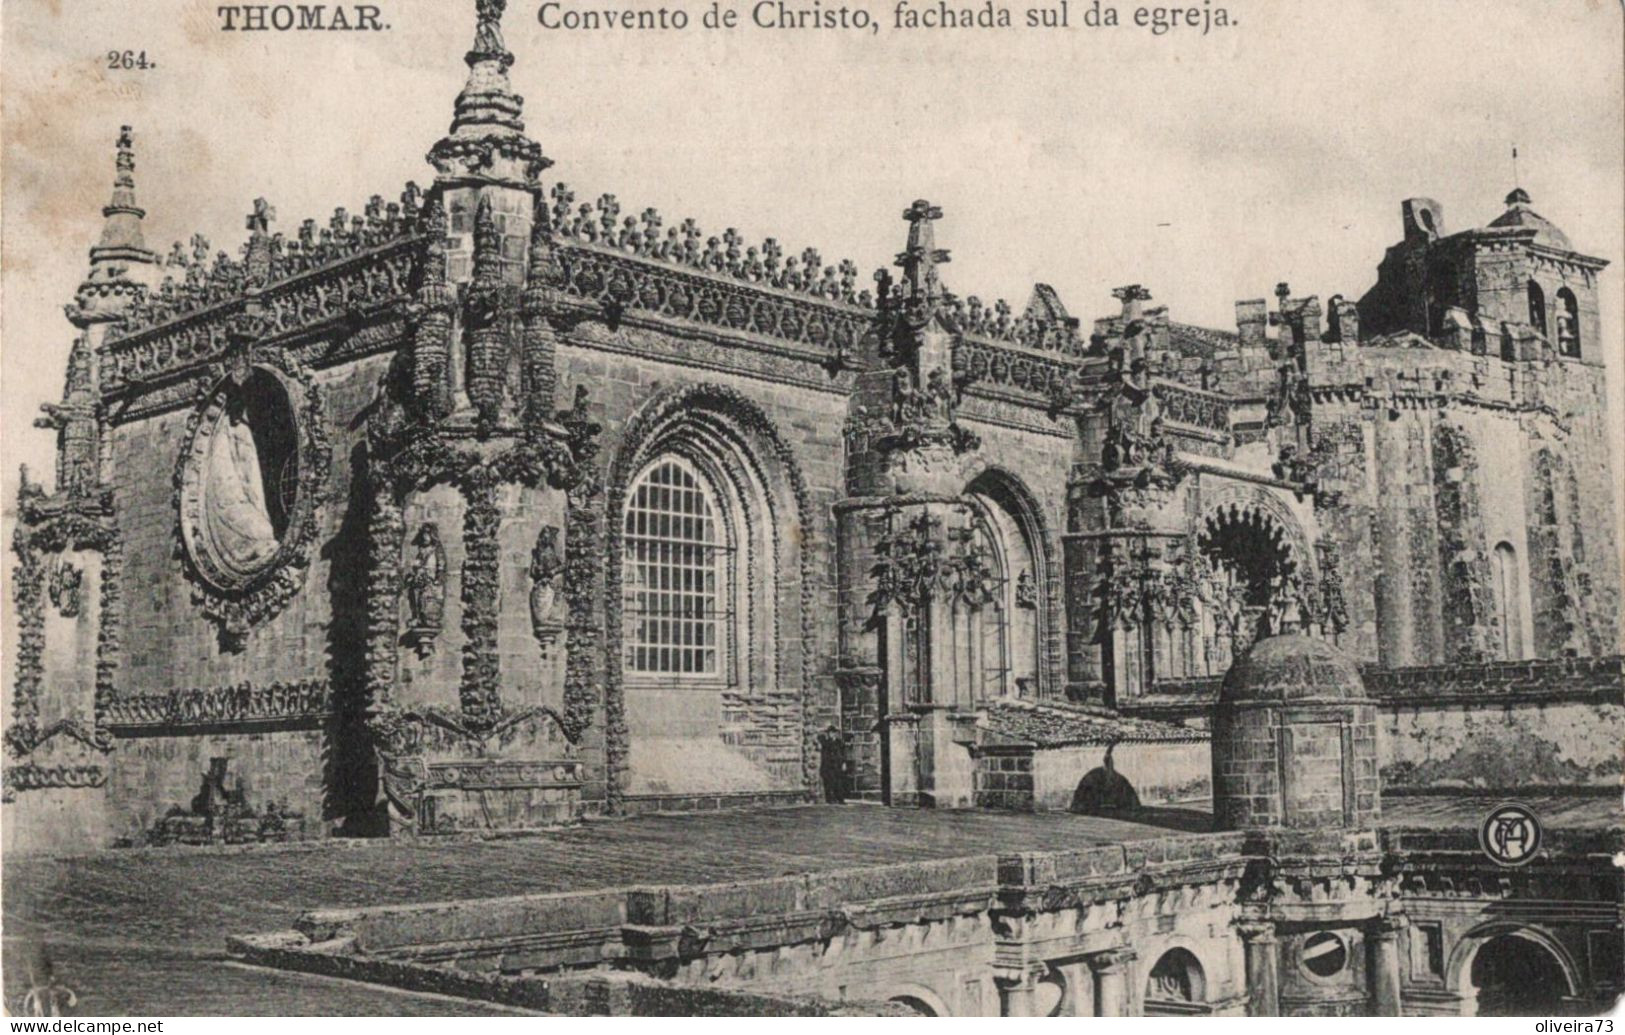 TOMAR - THOMAR - Canvento De Cristo, Fachada Sul Da Igreja (Ed. F. A. Martins   Nº 264) - PORTUGAL - Santarem